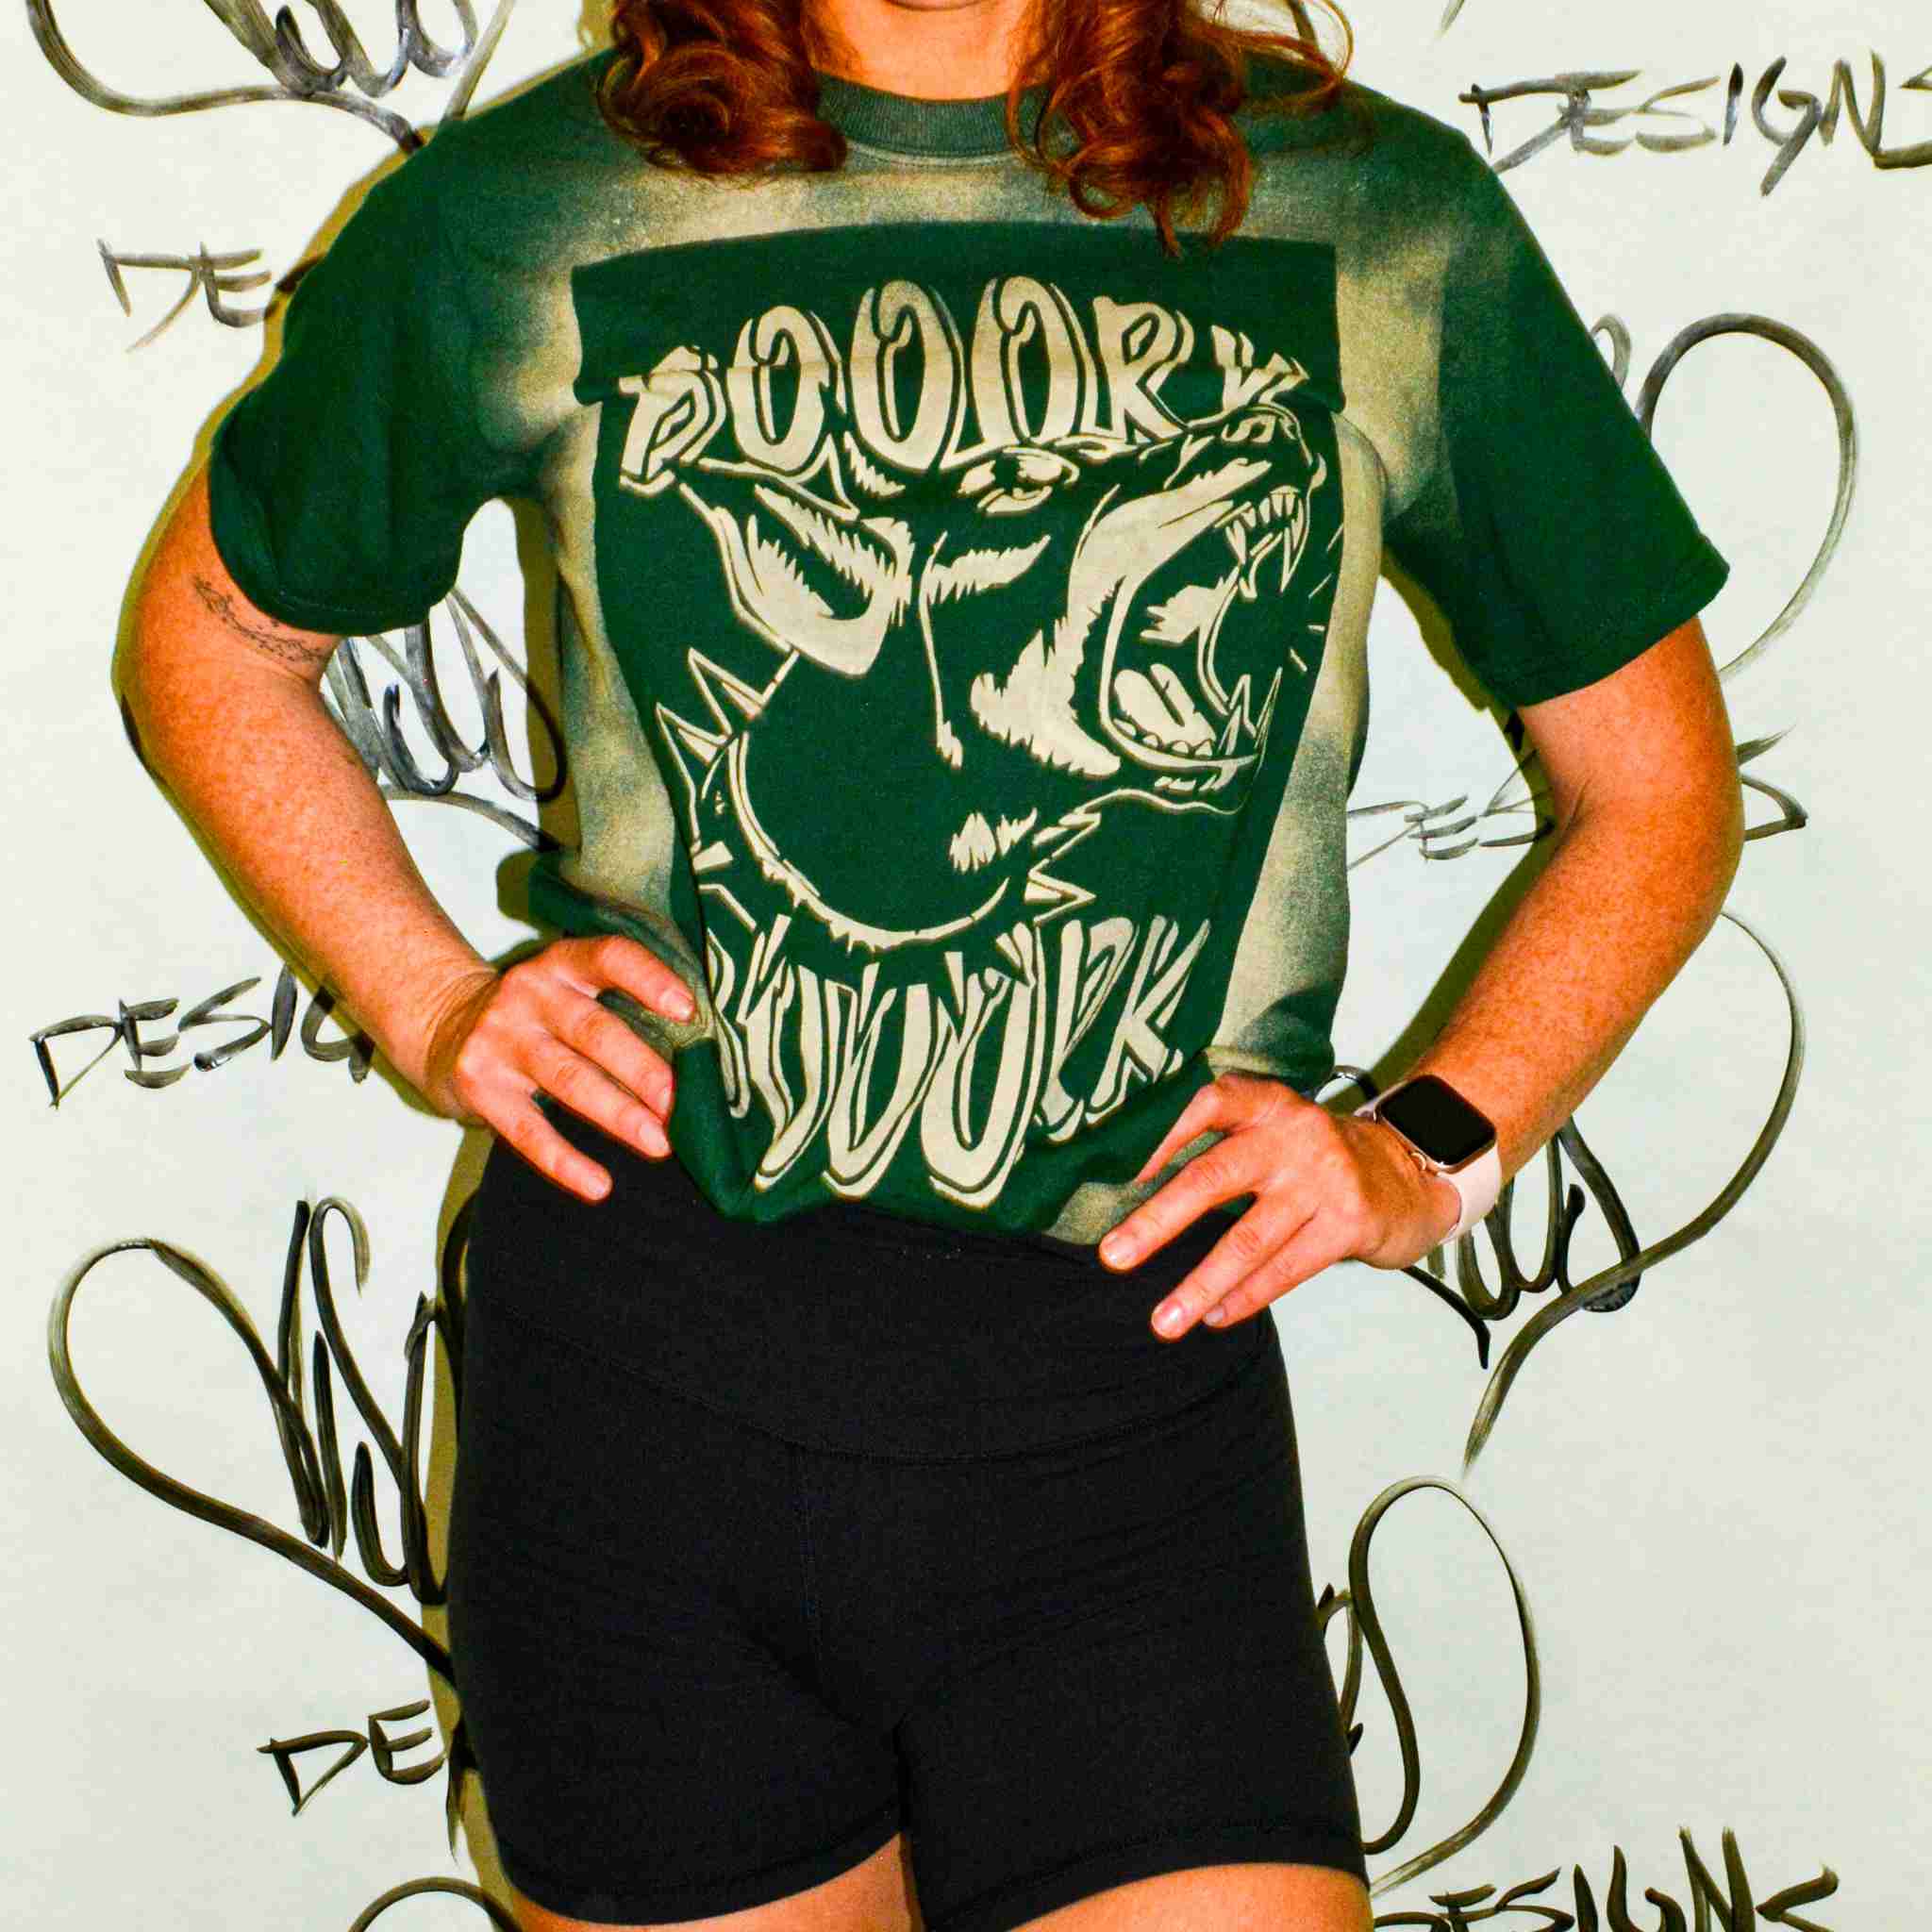 a woman wearing a green shirt and black shorts.